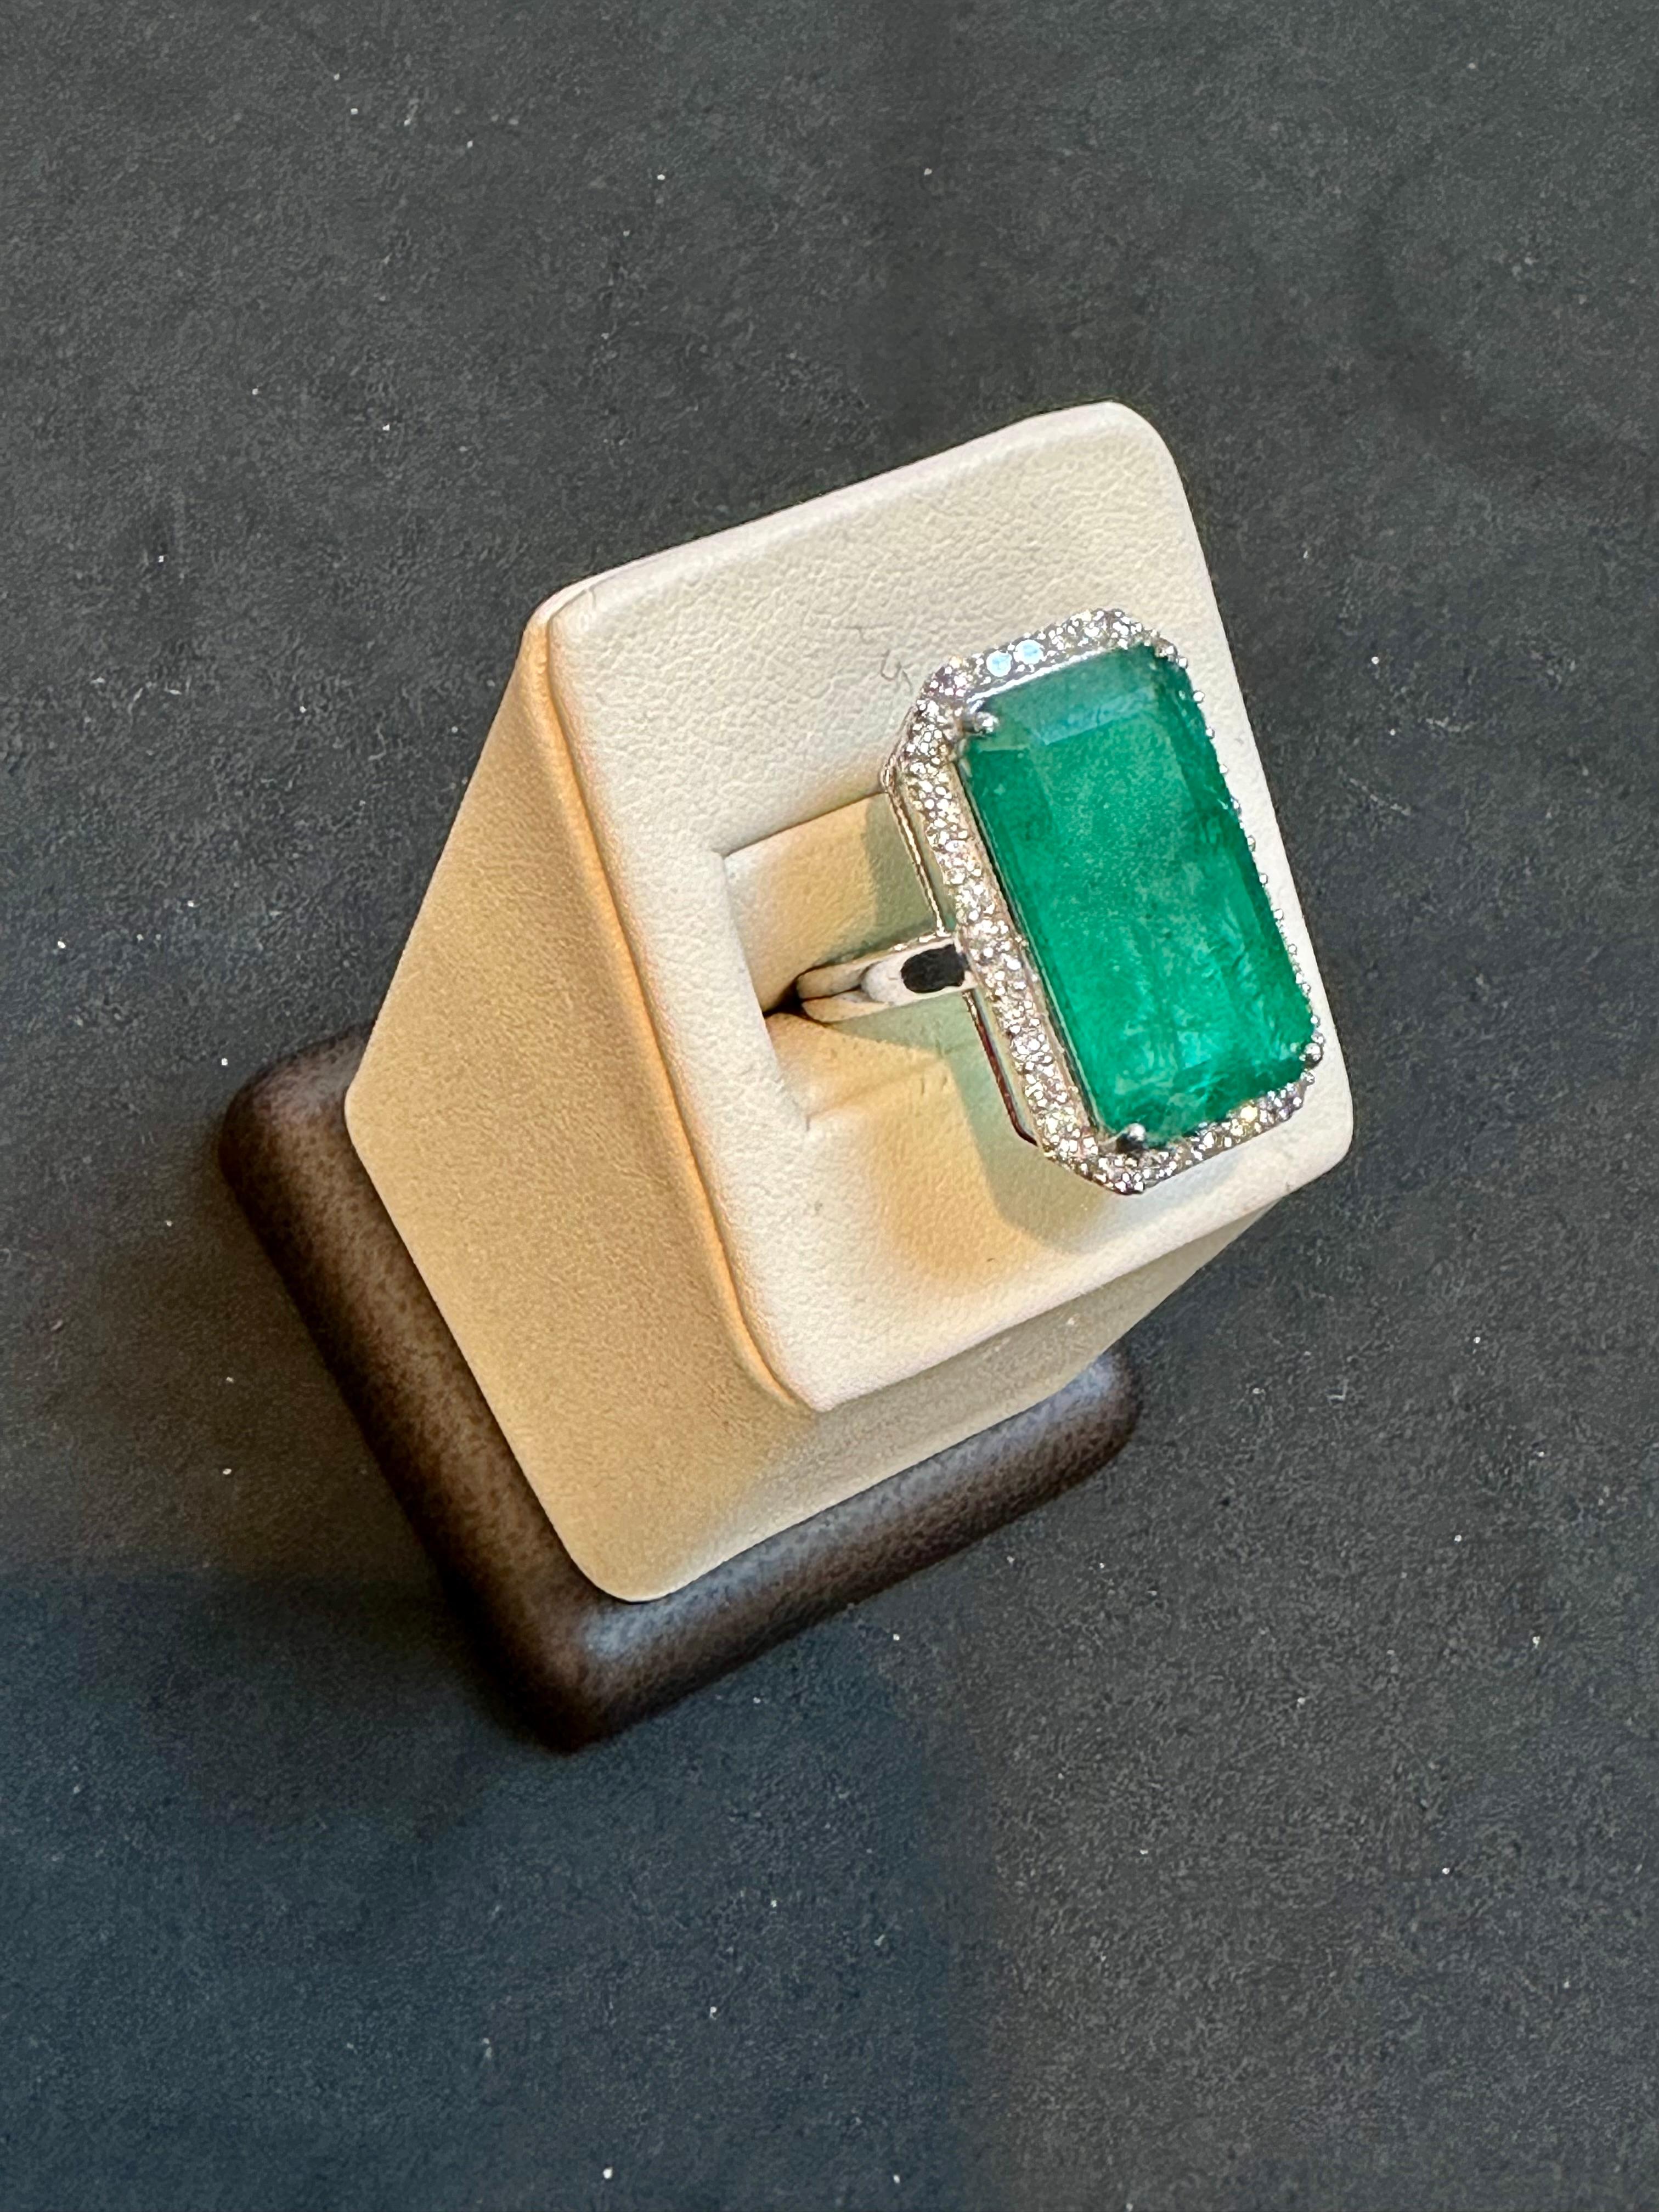 Natural 16 Carat Emerald Cut Zambian Emerald & Diamond Ring in 14kt White Gold For Sale 2